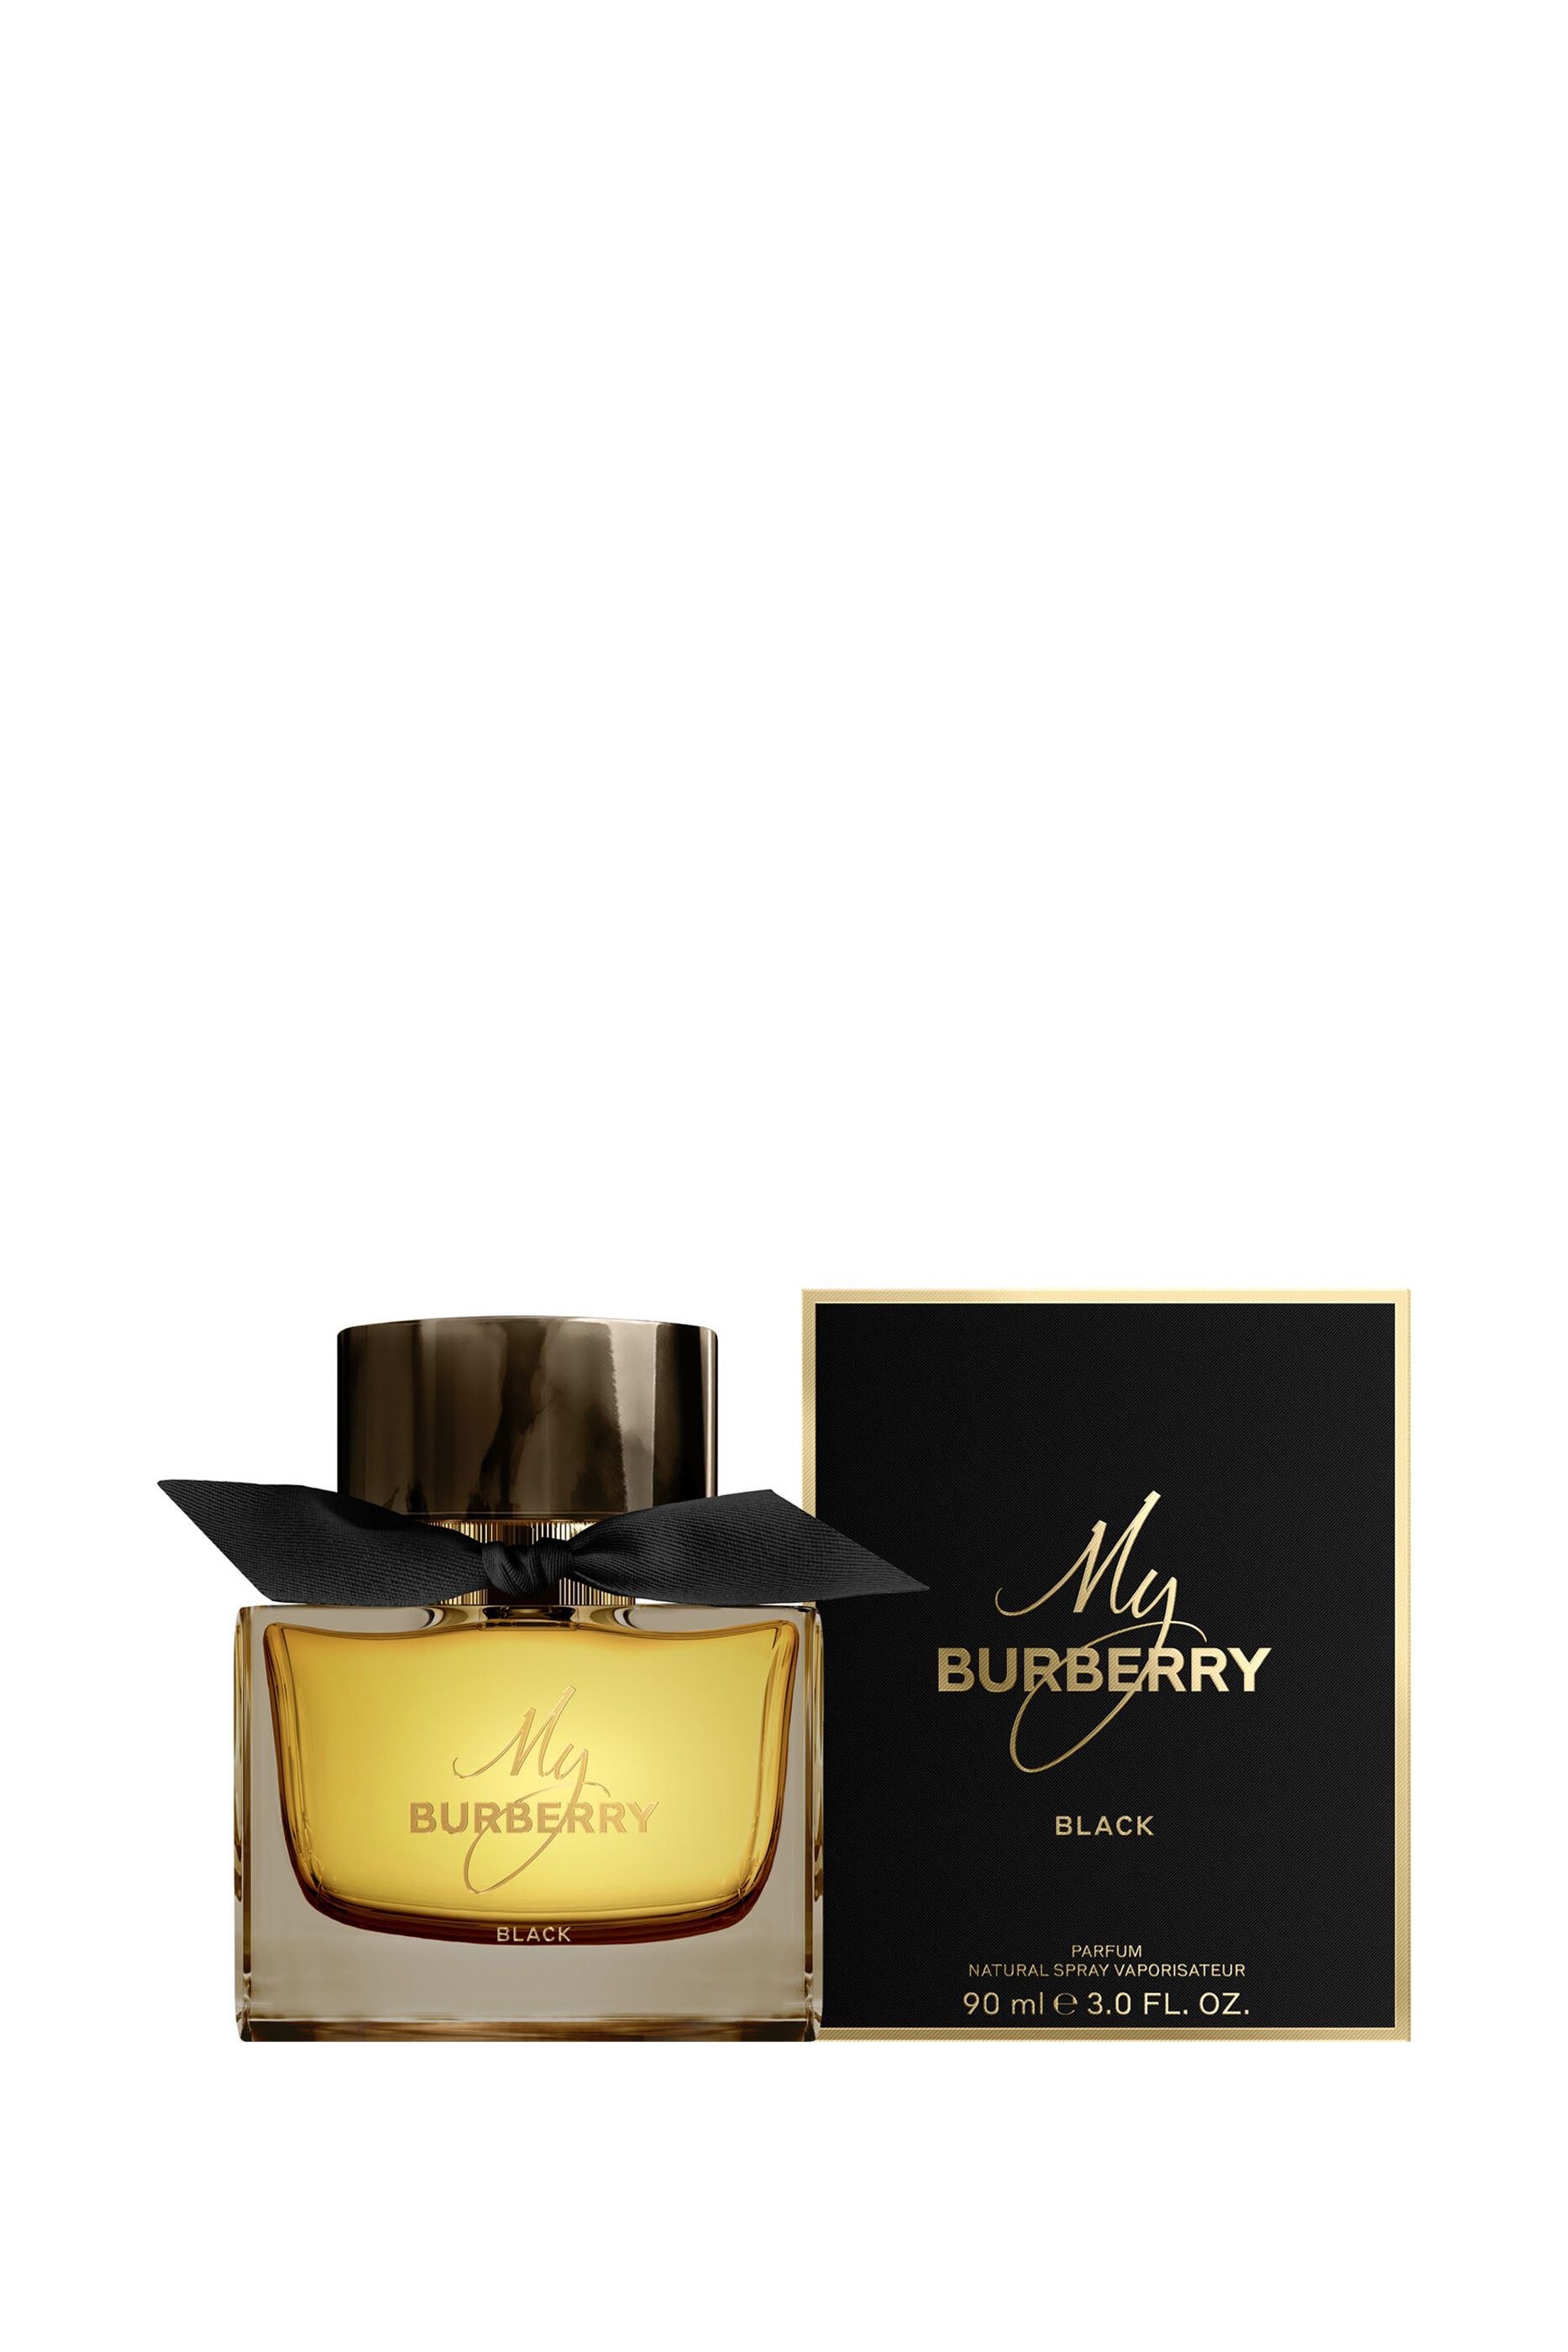 Buy Burberry My Burberry Black Eau de Parfum for | Bloomingdale's